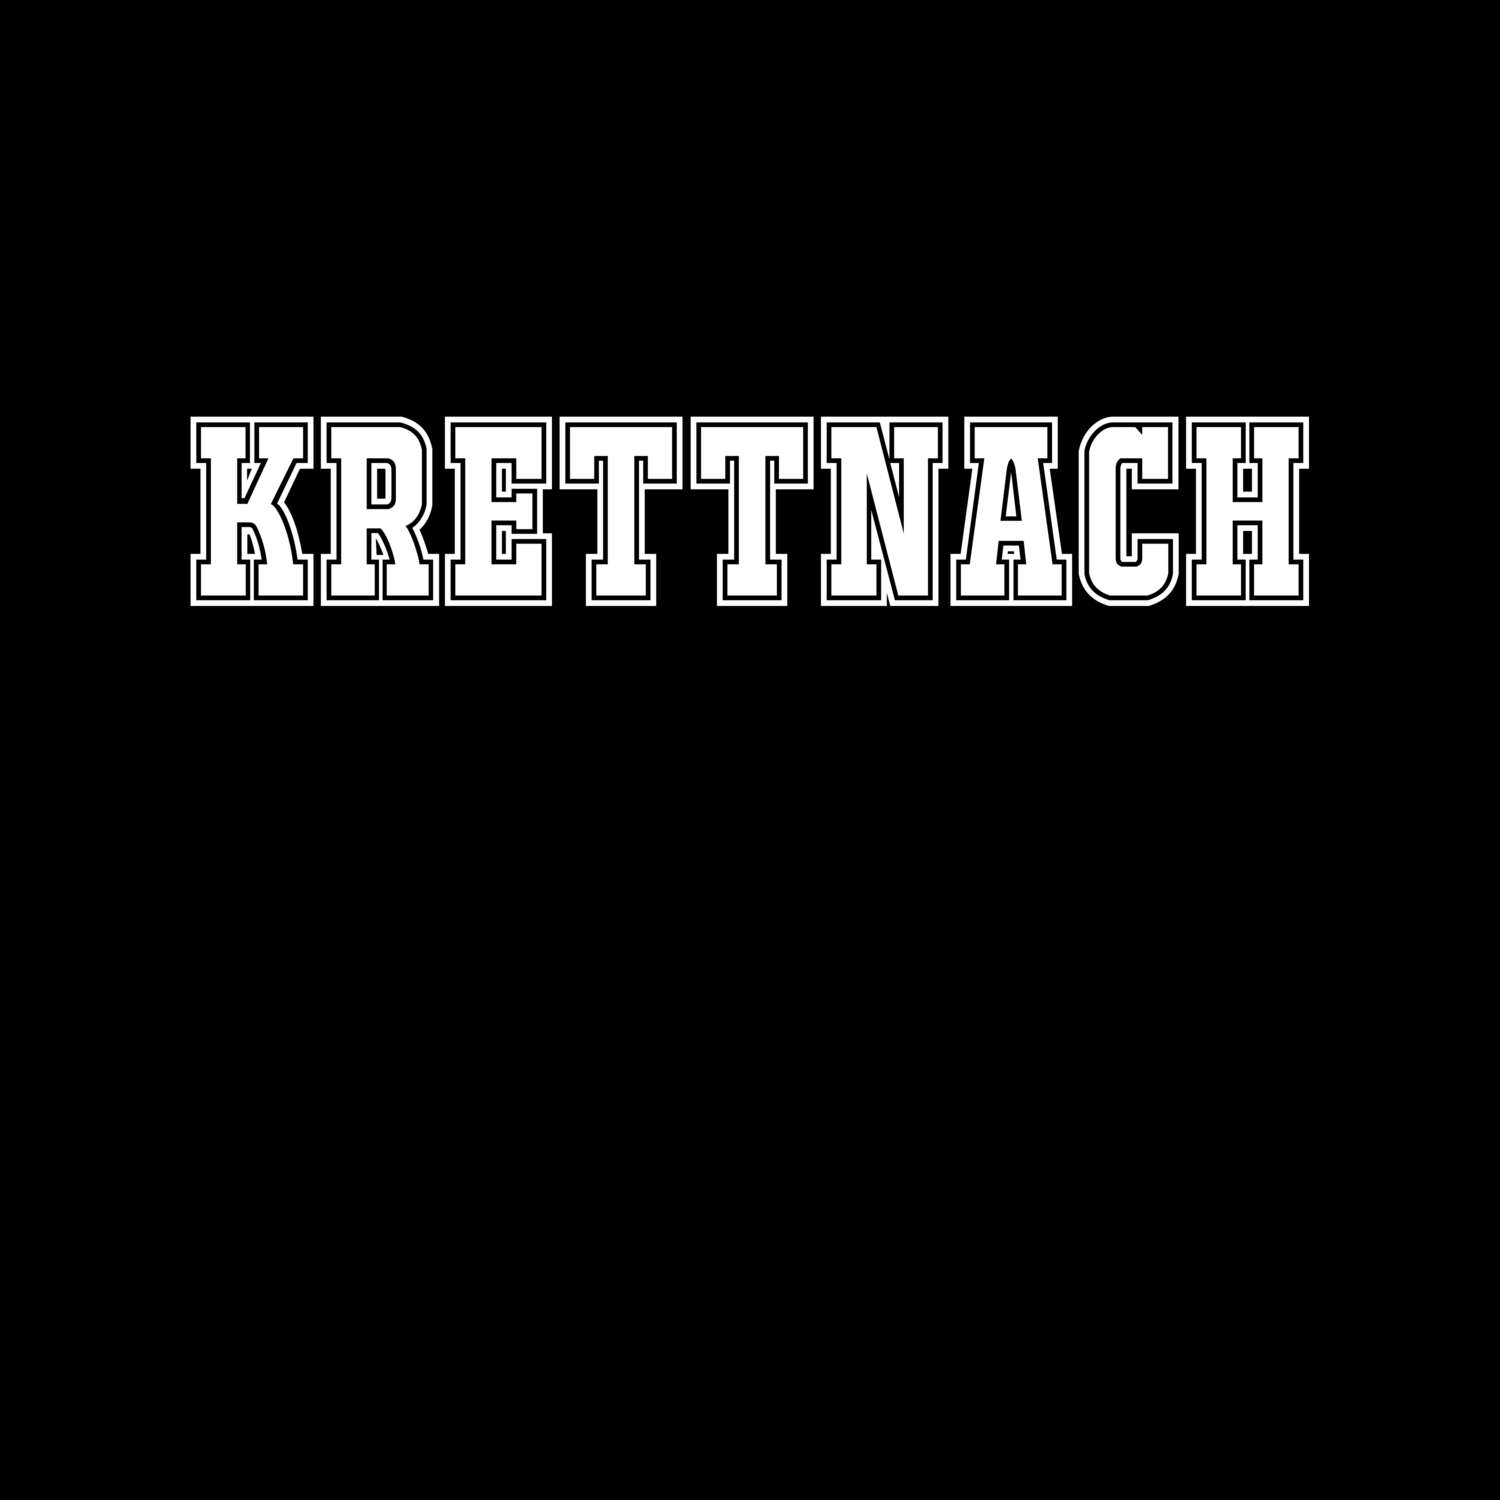 Krettnach T-Shirt »Classic«